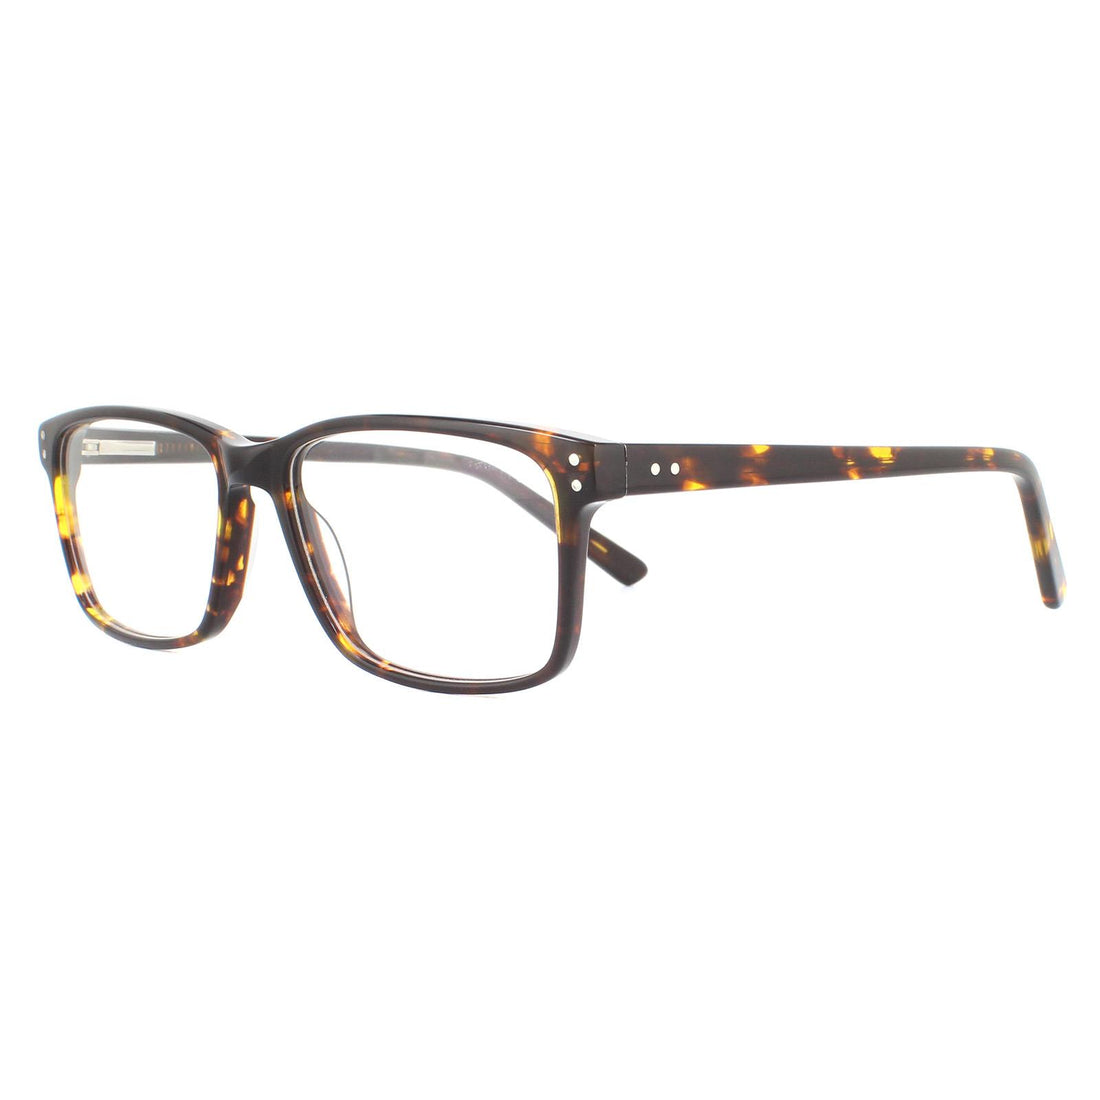 SunOptic Glasses Frames A85 A Turtle Brown Men Women